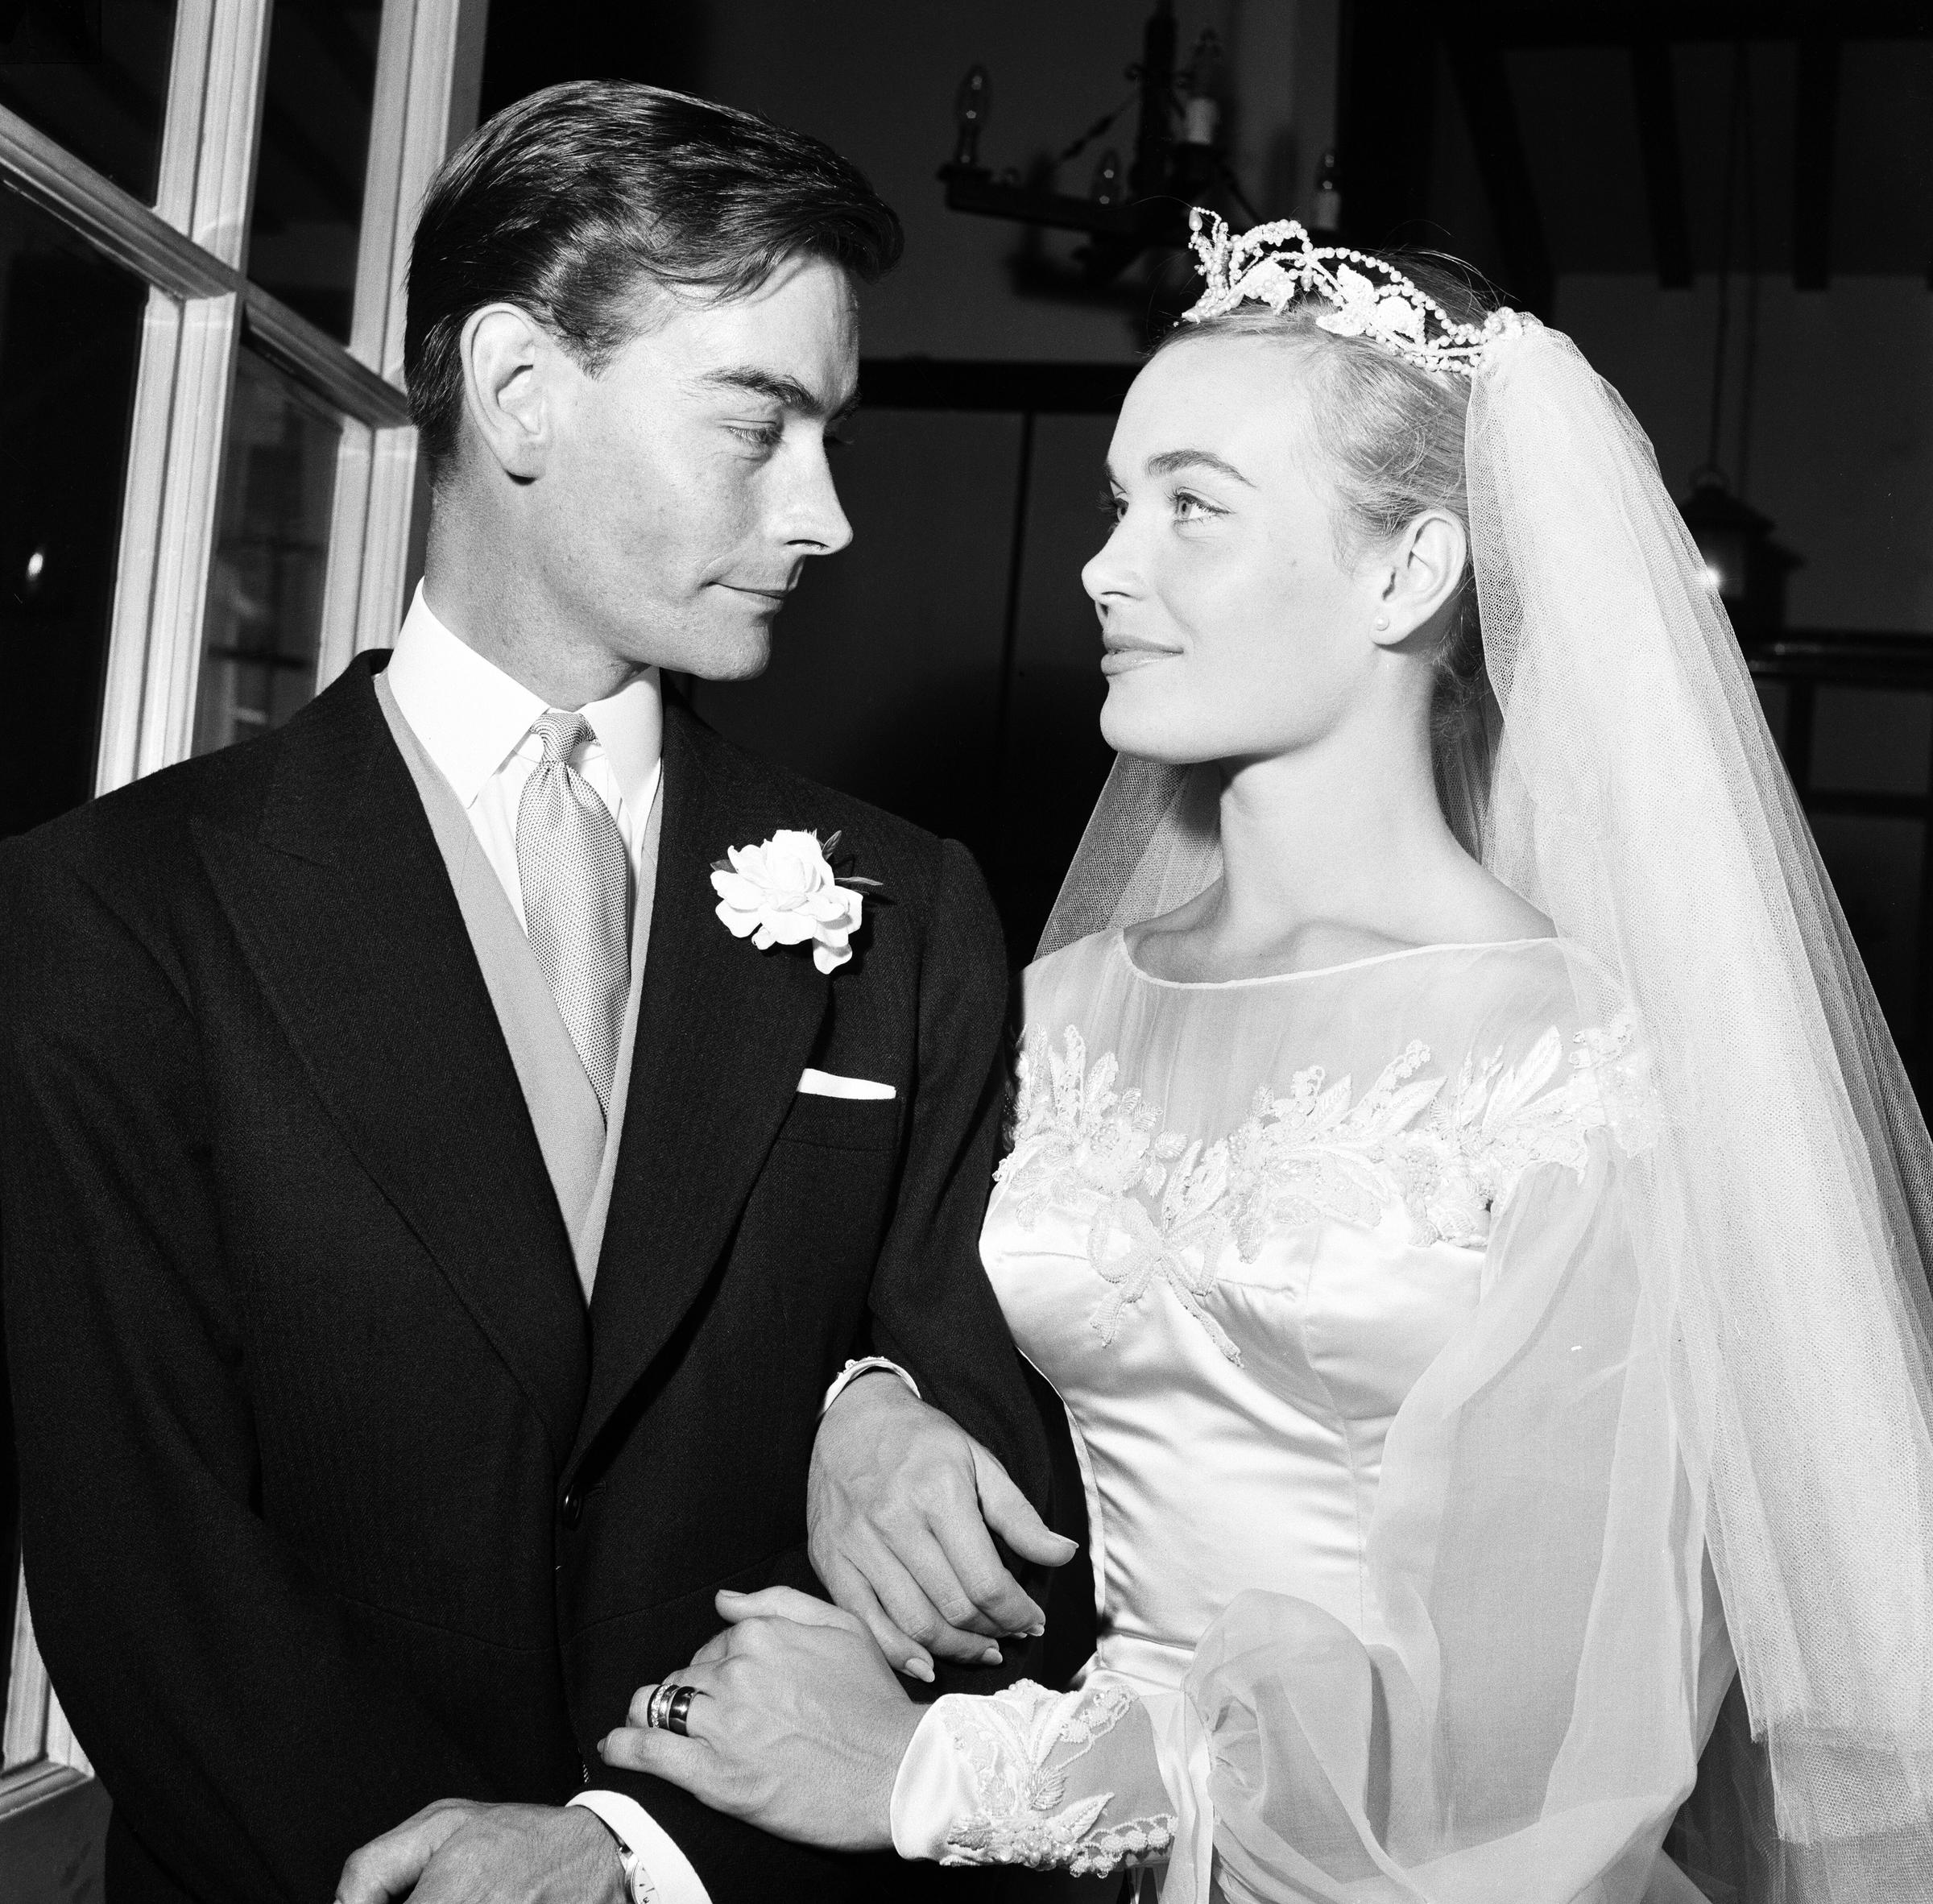 Colin Lenton Rowe und Shirley Eaton heirateten am 5. August 1957 in der St. Mary's Kirche in Kenton, Middlesex. | Quelle: Getty Images